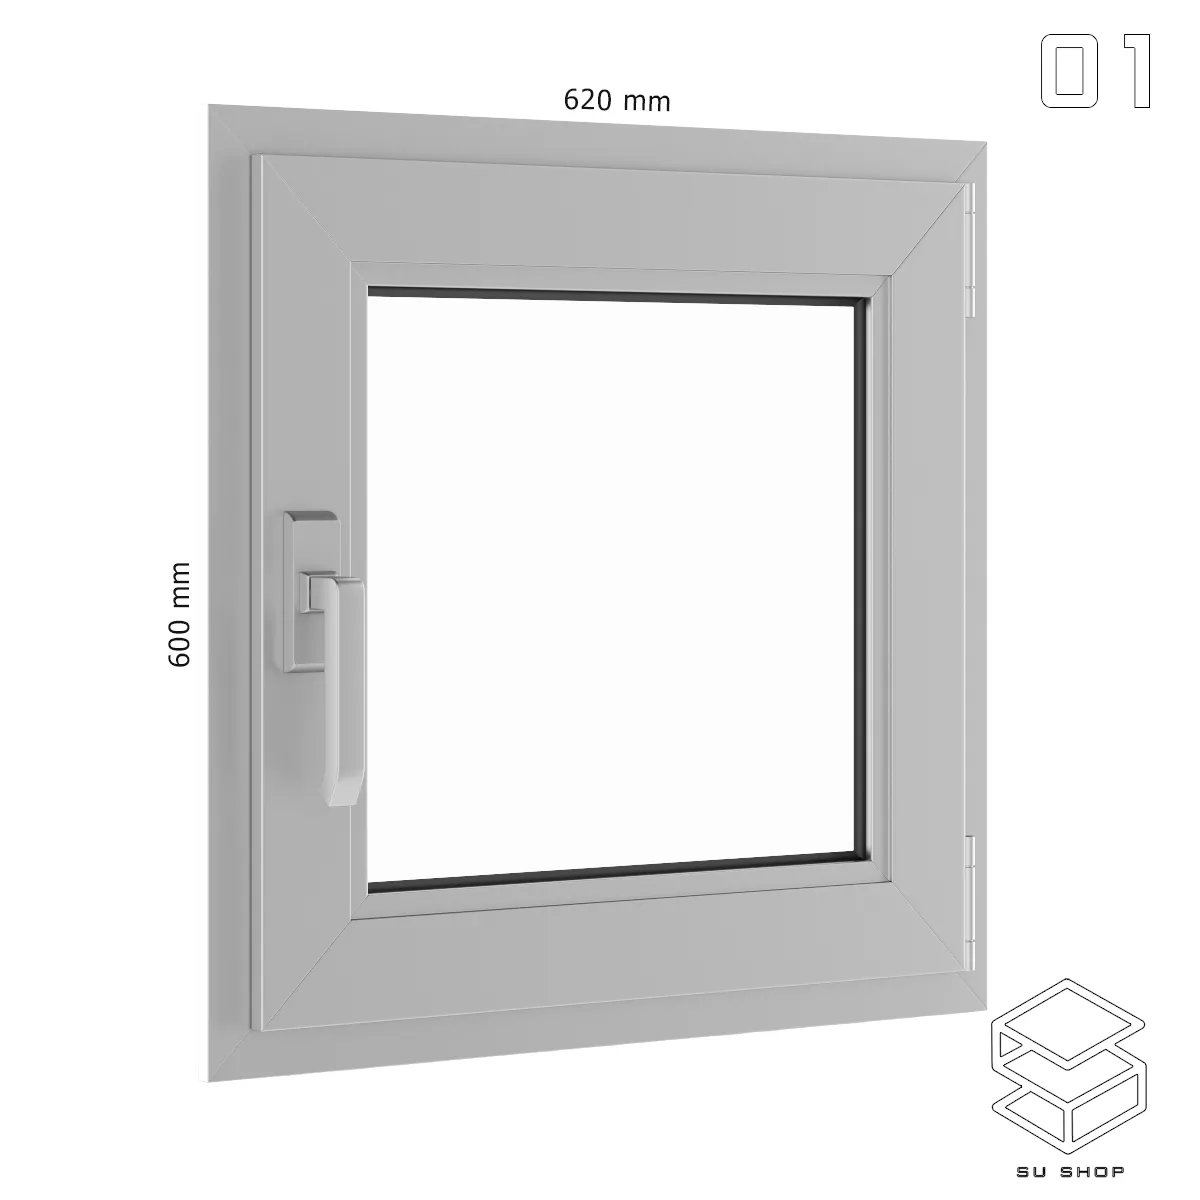 MODERN WINDOWS - SKETCHUP 3D MODEL - VRAY OR ENSCAPE - ID16748